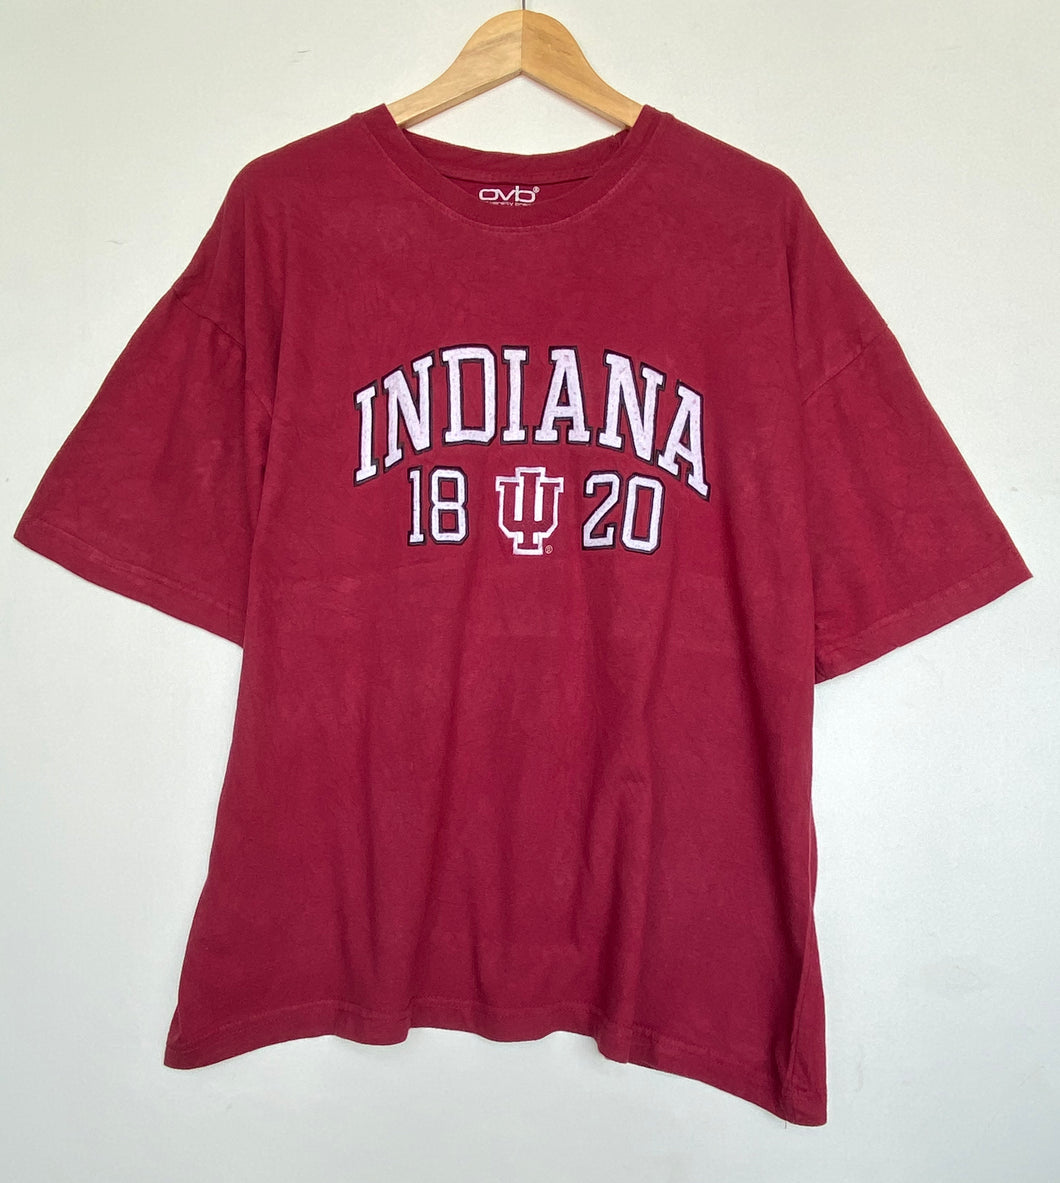 Indiana Hoosiers t-shirt (XL)